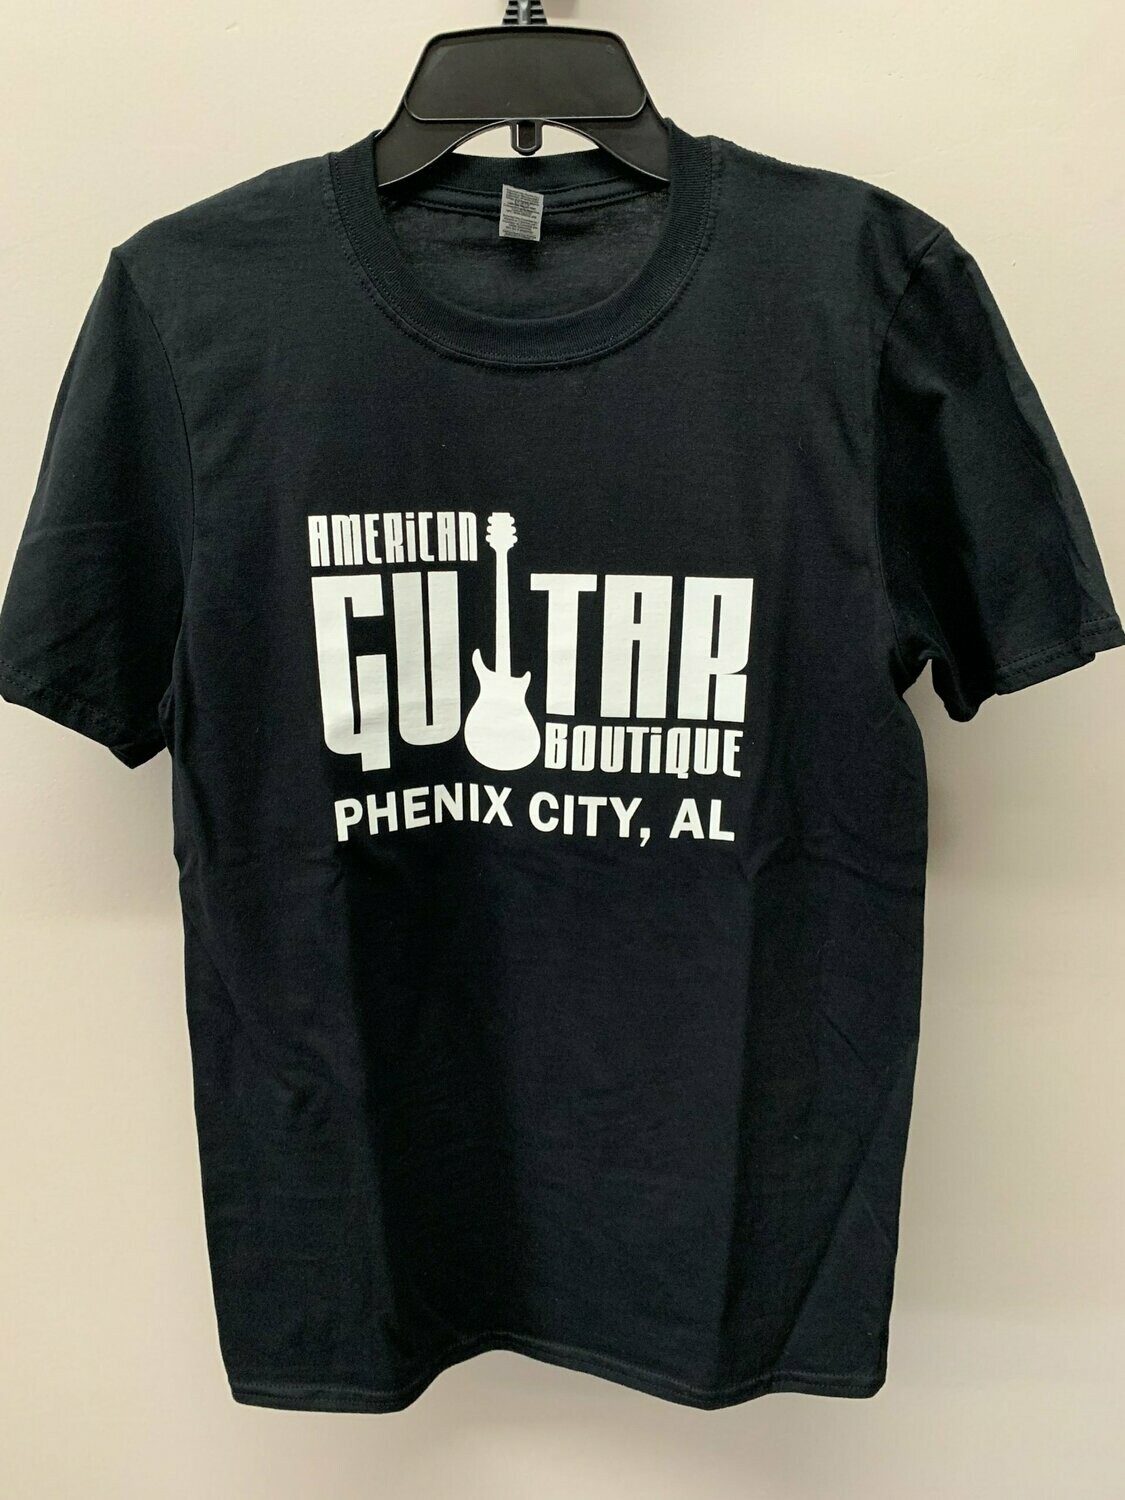 American Guitar Boutique T-Shirt - MEDIUM